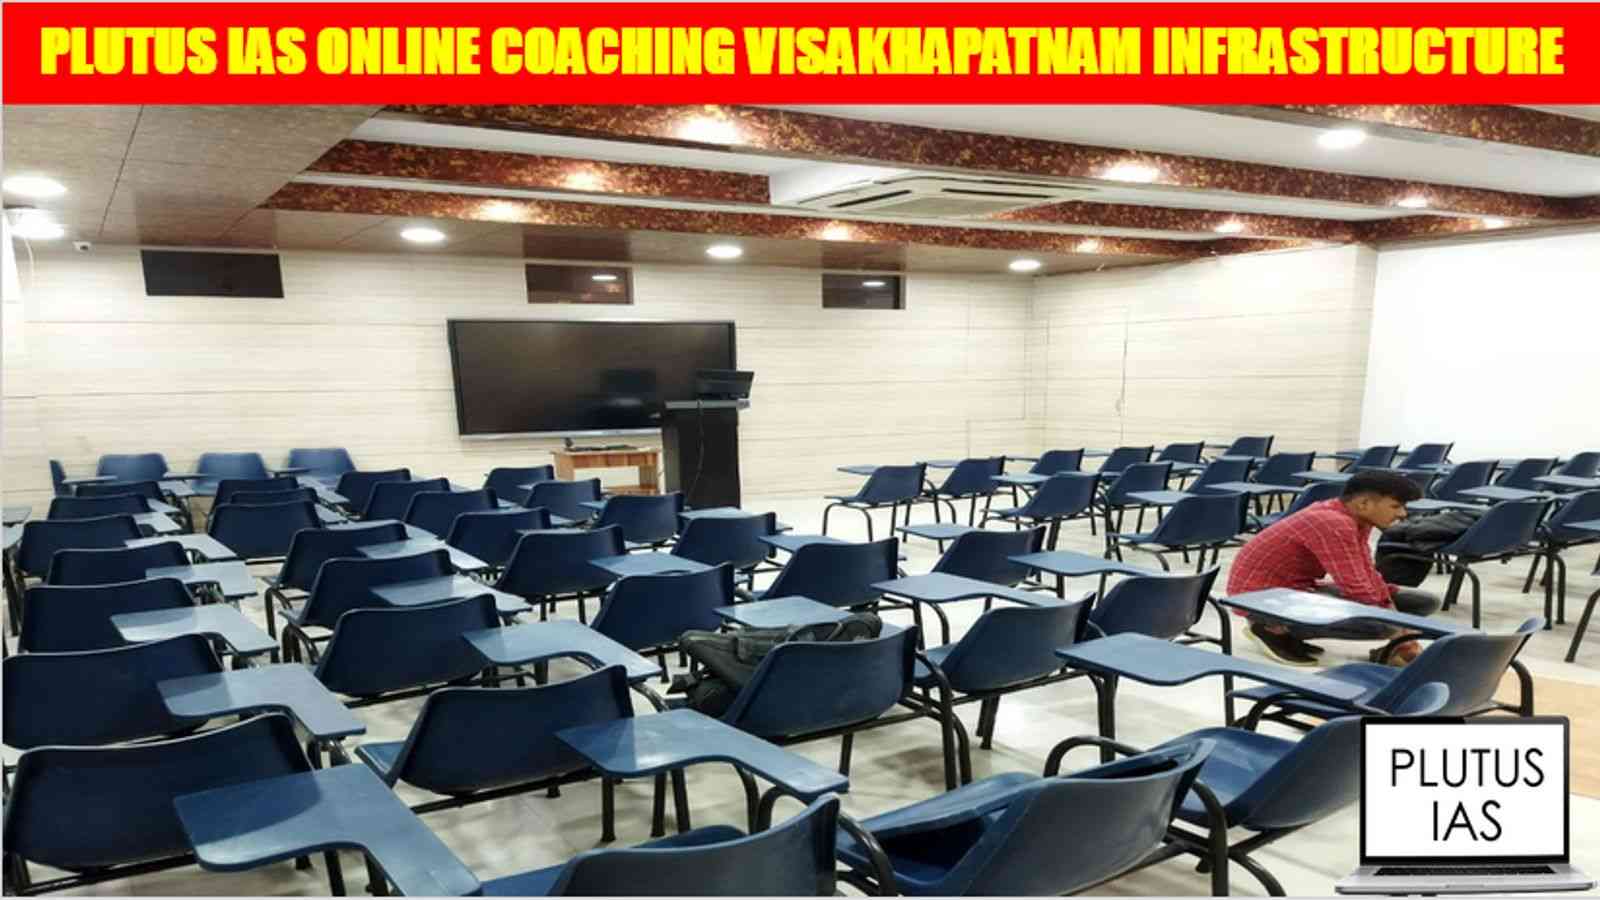 Plutus IAS Online Coaching Visakhapatnam Infrastructure